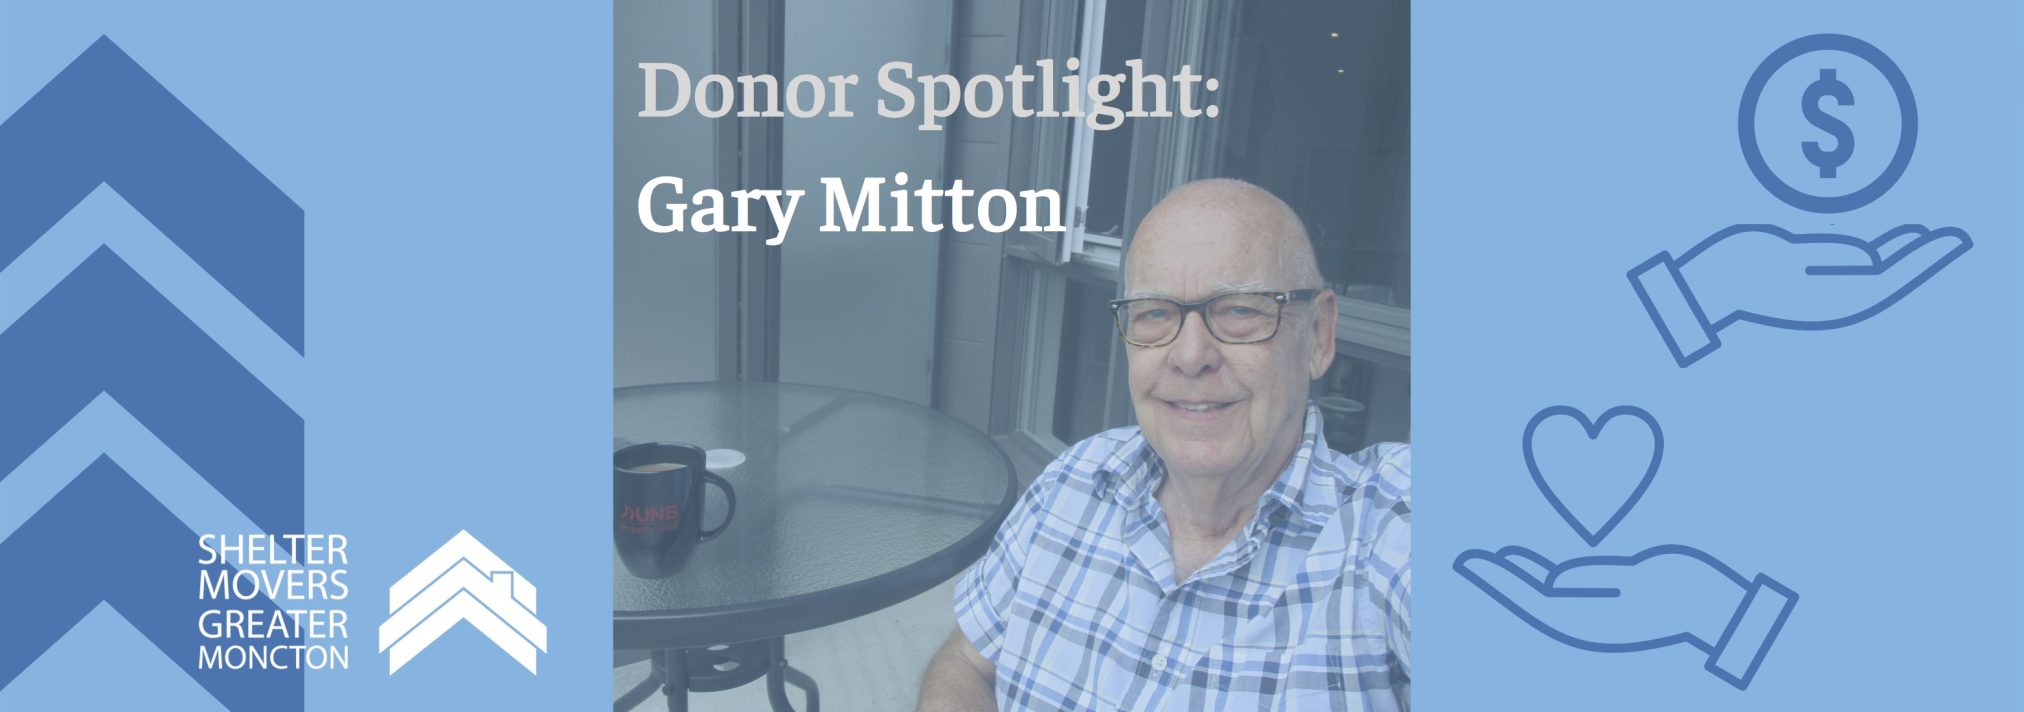 Donor Spotlight- Gary Mitton